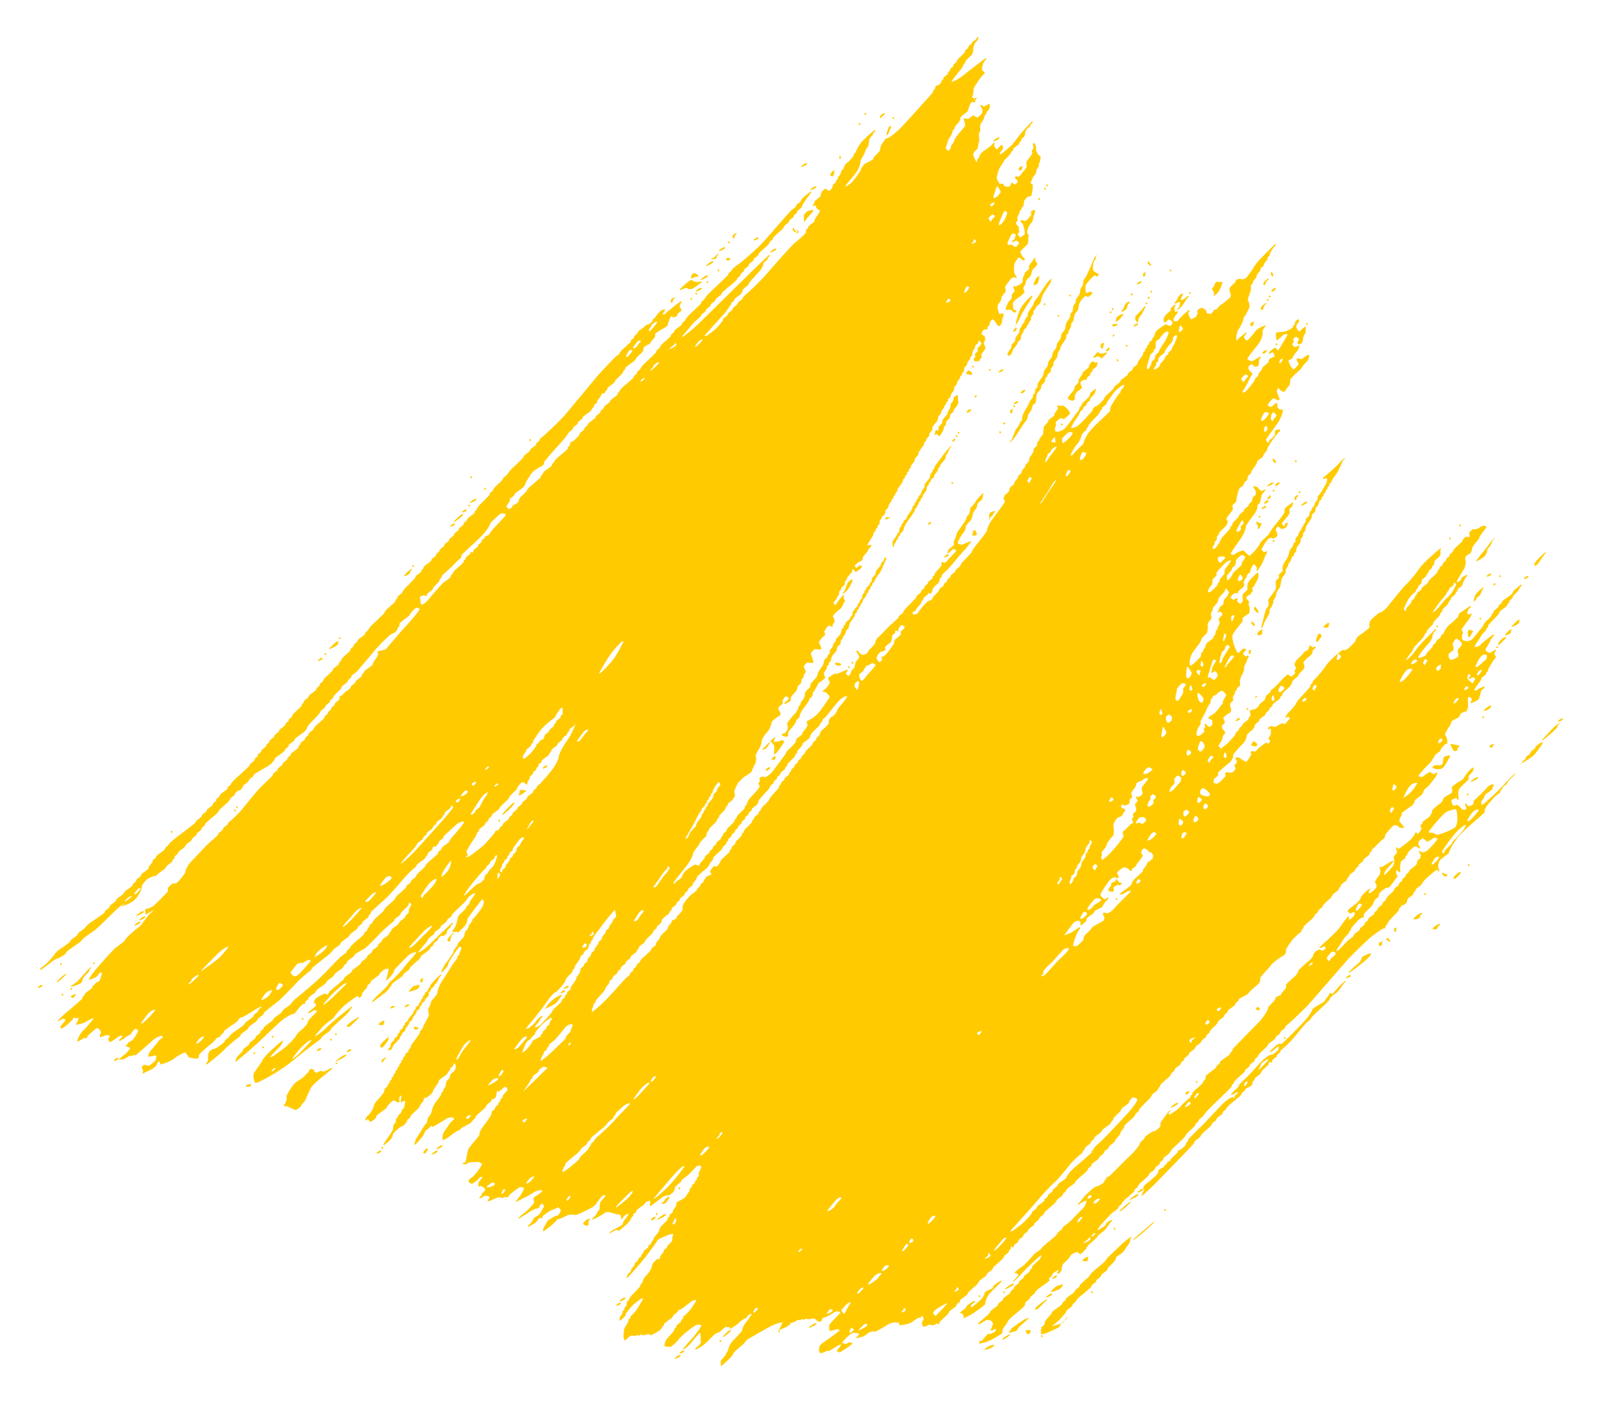 forpligtelse ved siden af Stolpe Yellow Brush Stroke Style PNG Transparent Background, Free Download #47318  - FreeIconsPNG